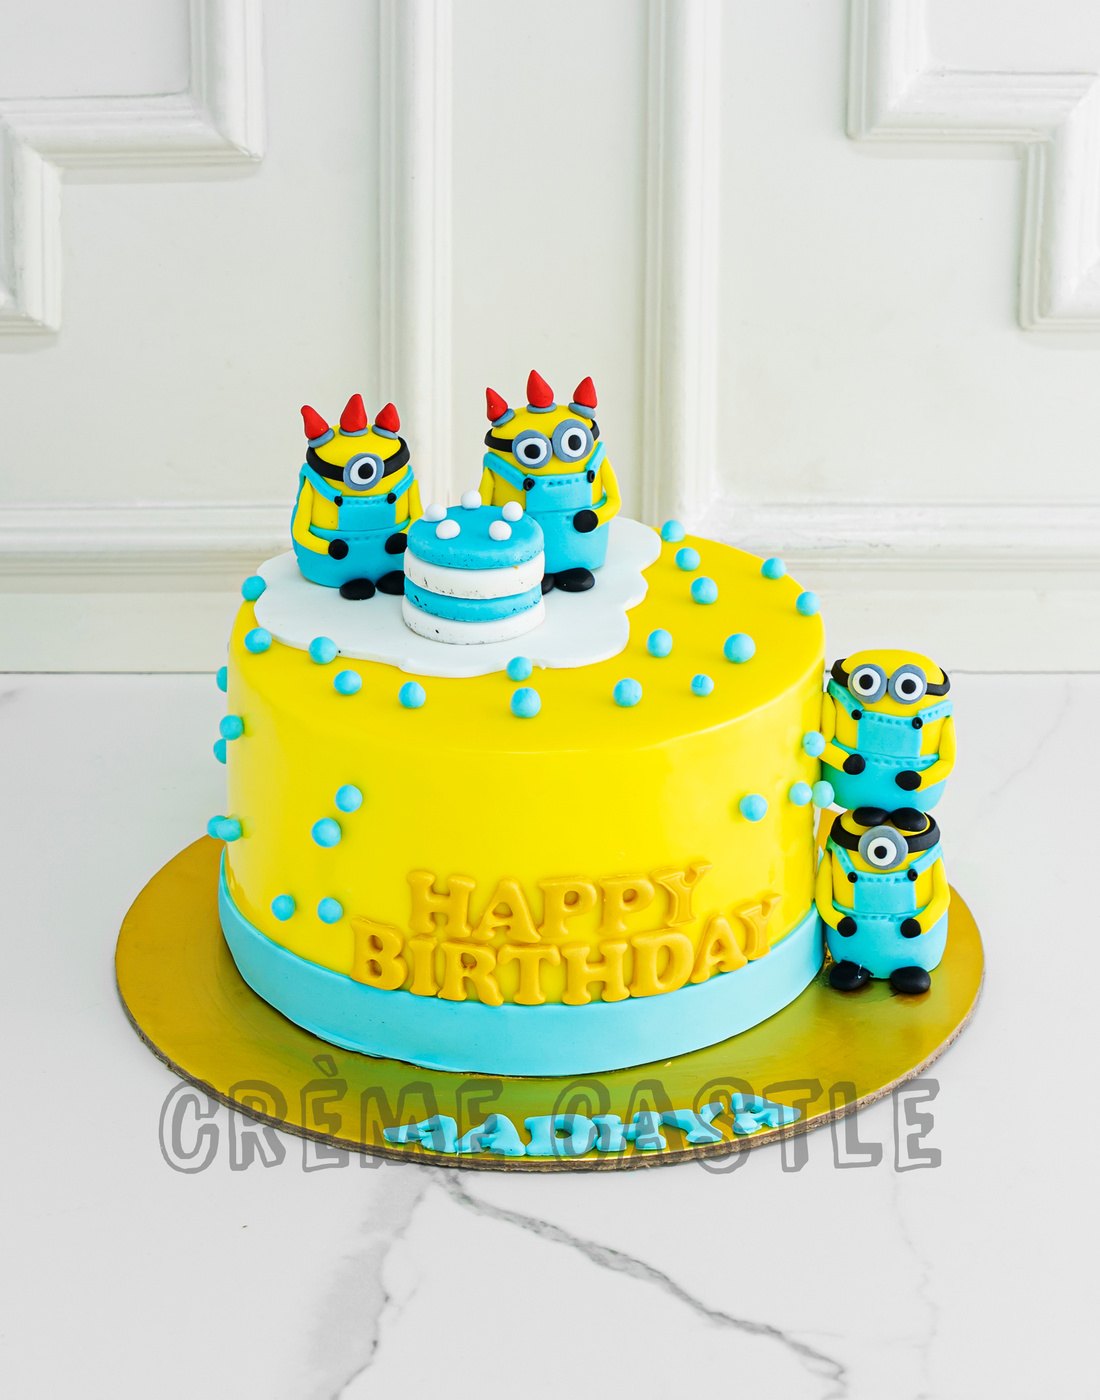 Funny Minion Cake- Order Online Funny Minion Cake @ Flavoursguru